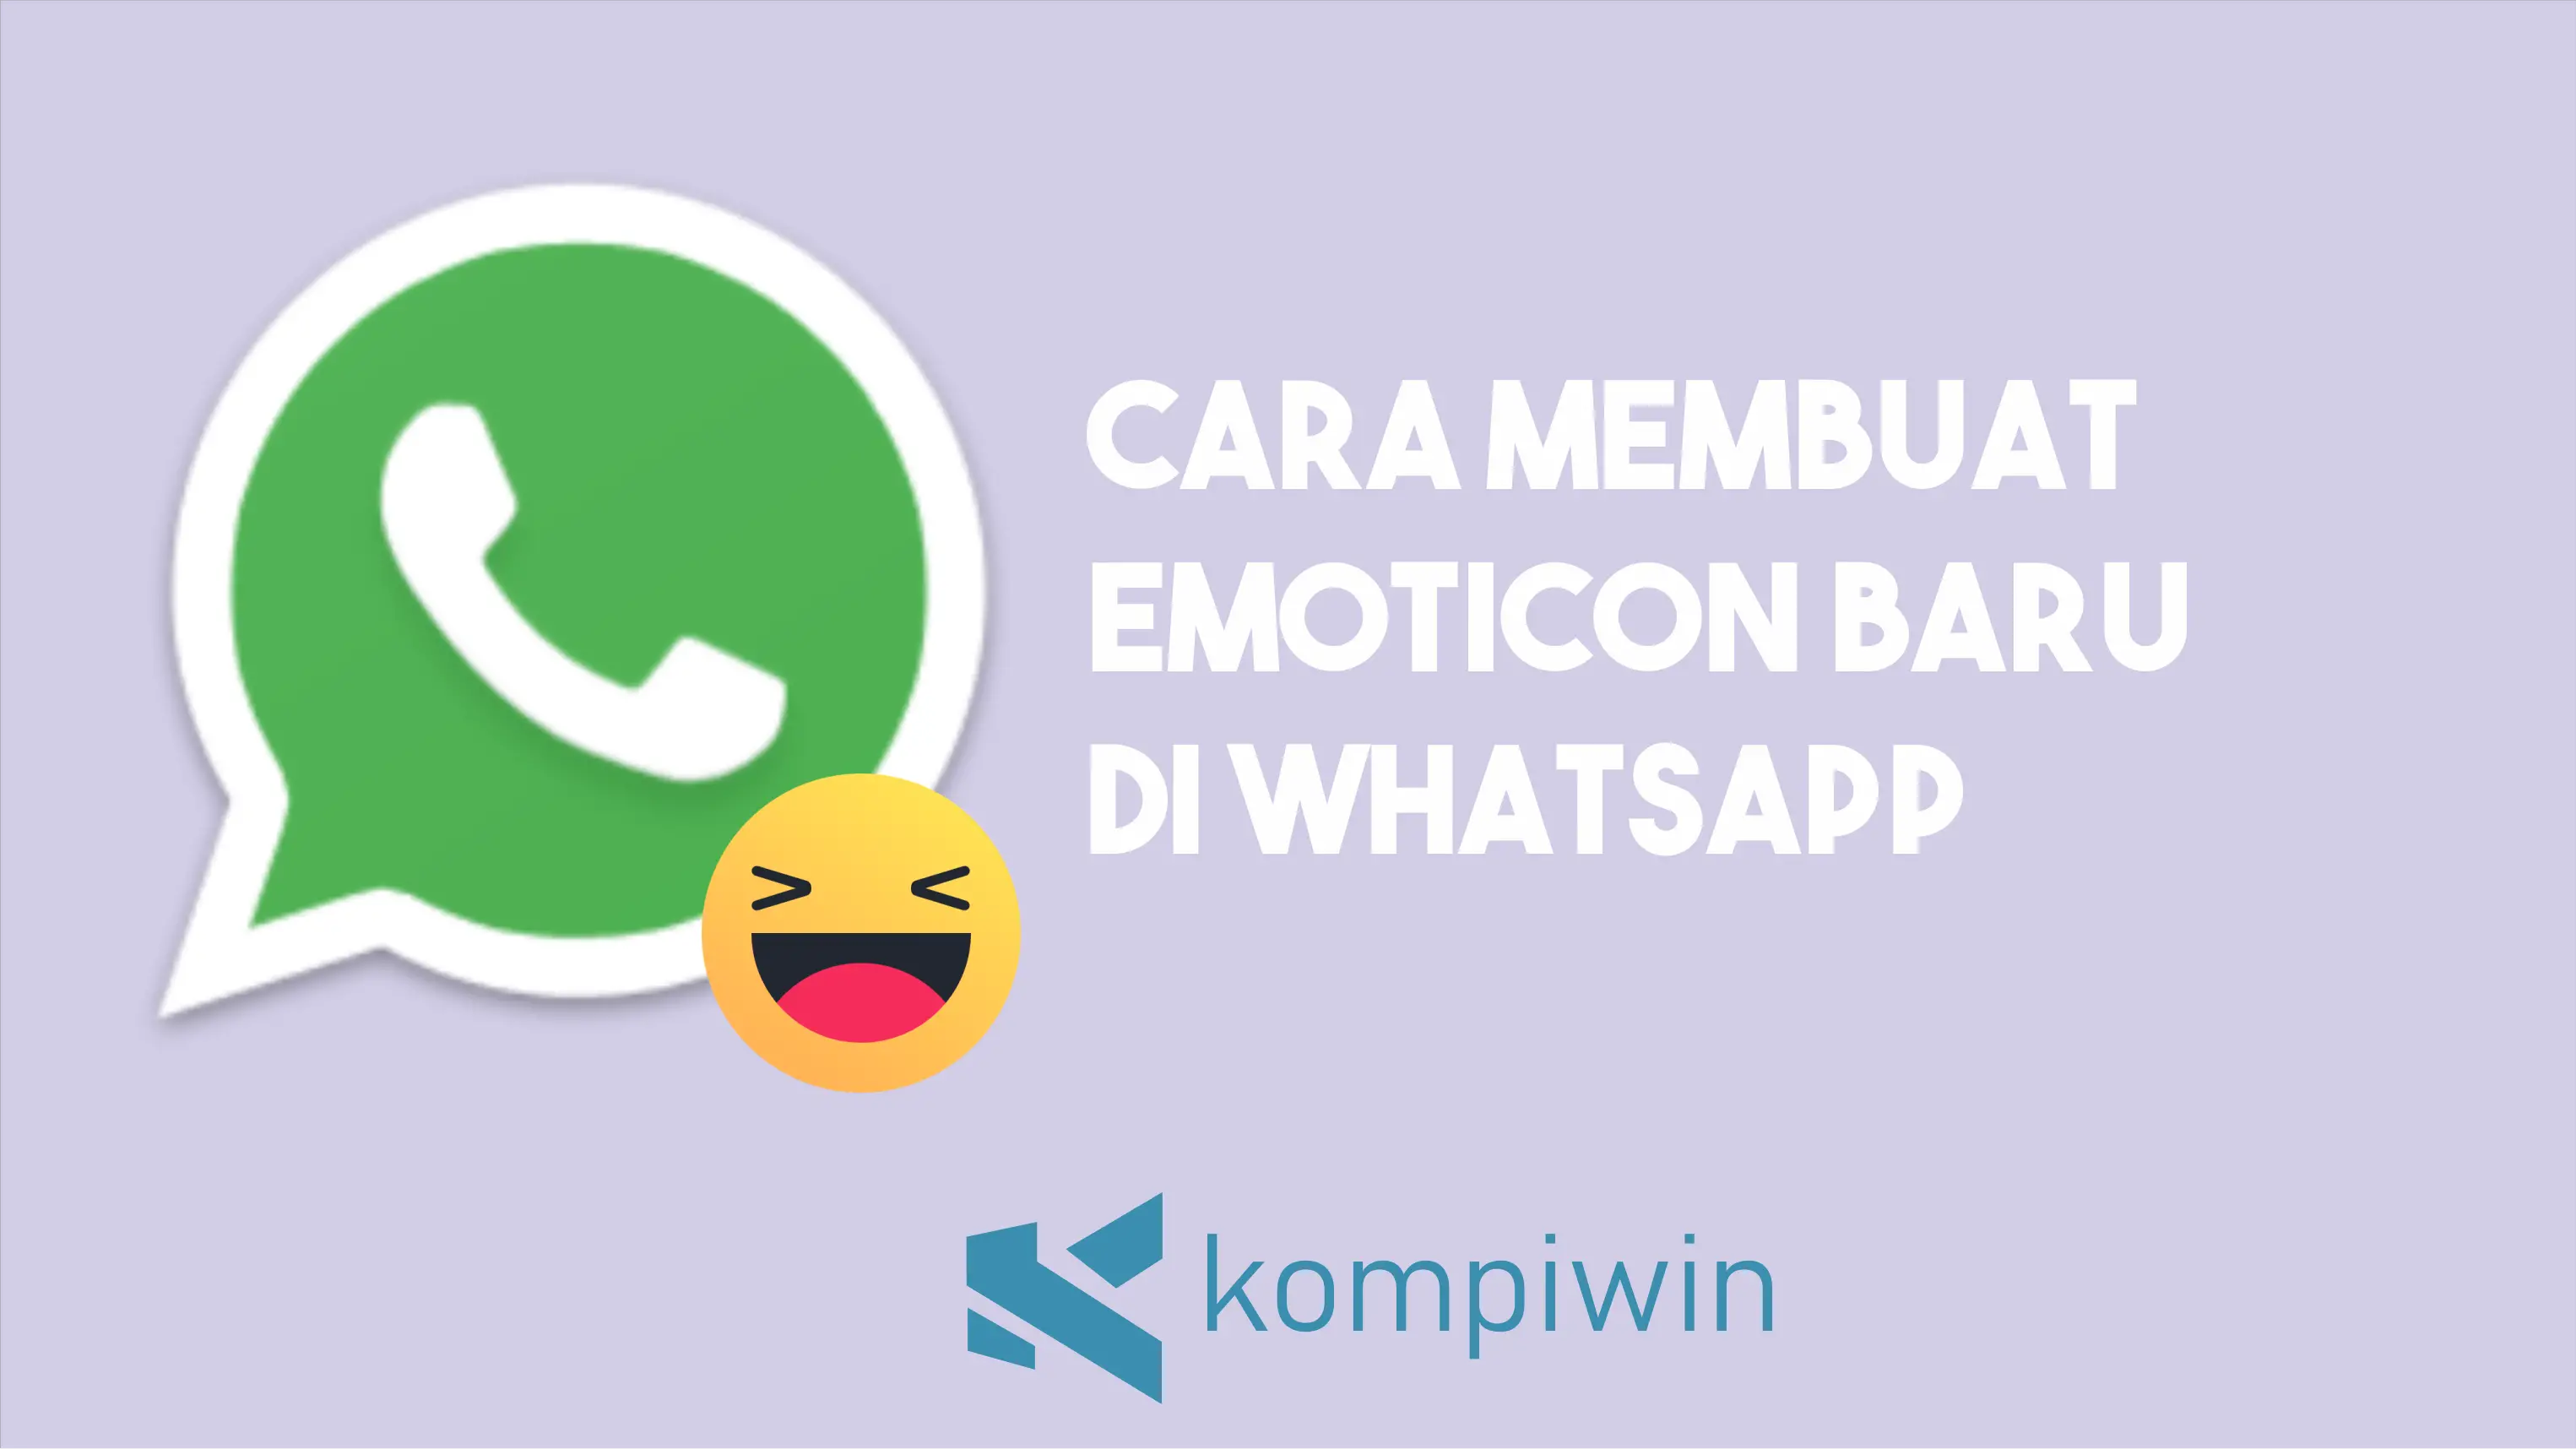 Cara Membuat Emoticon Baru Di Whatsapp